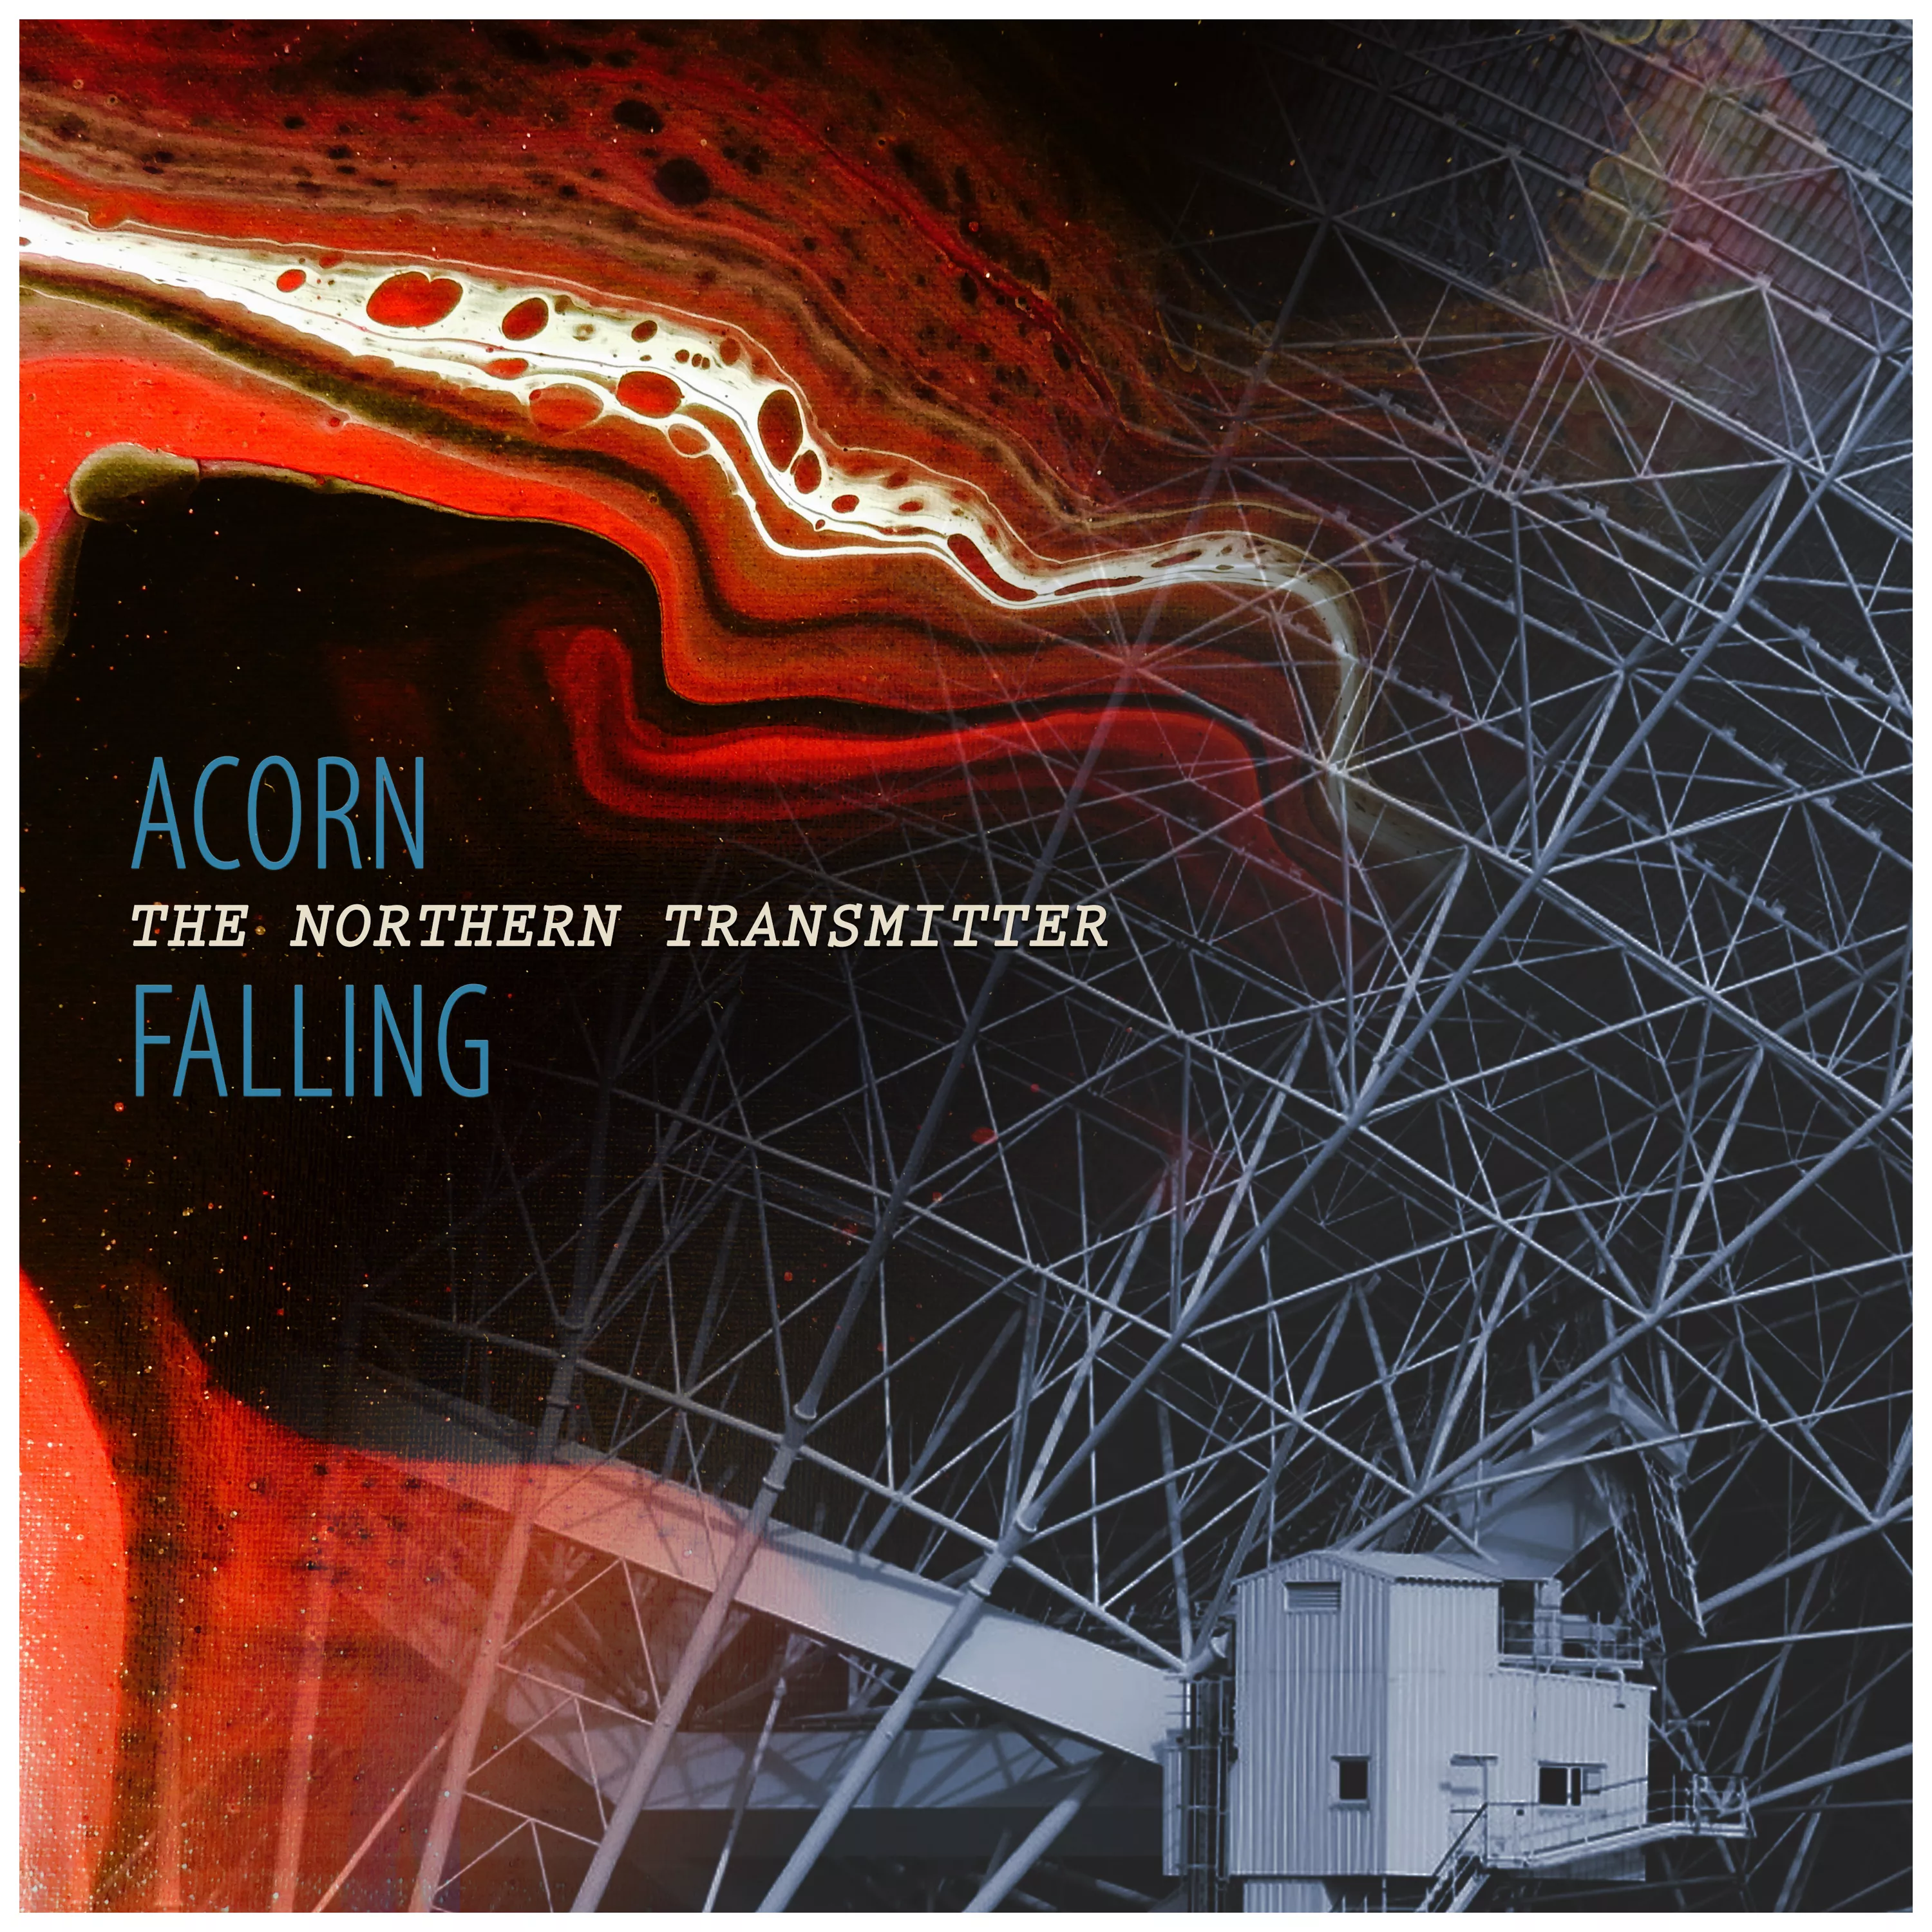 The Northern Transmitter - Acorn Falling